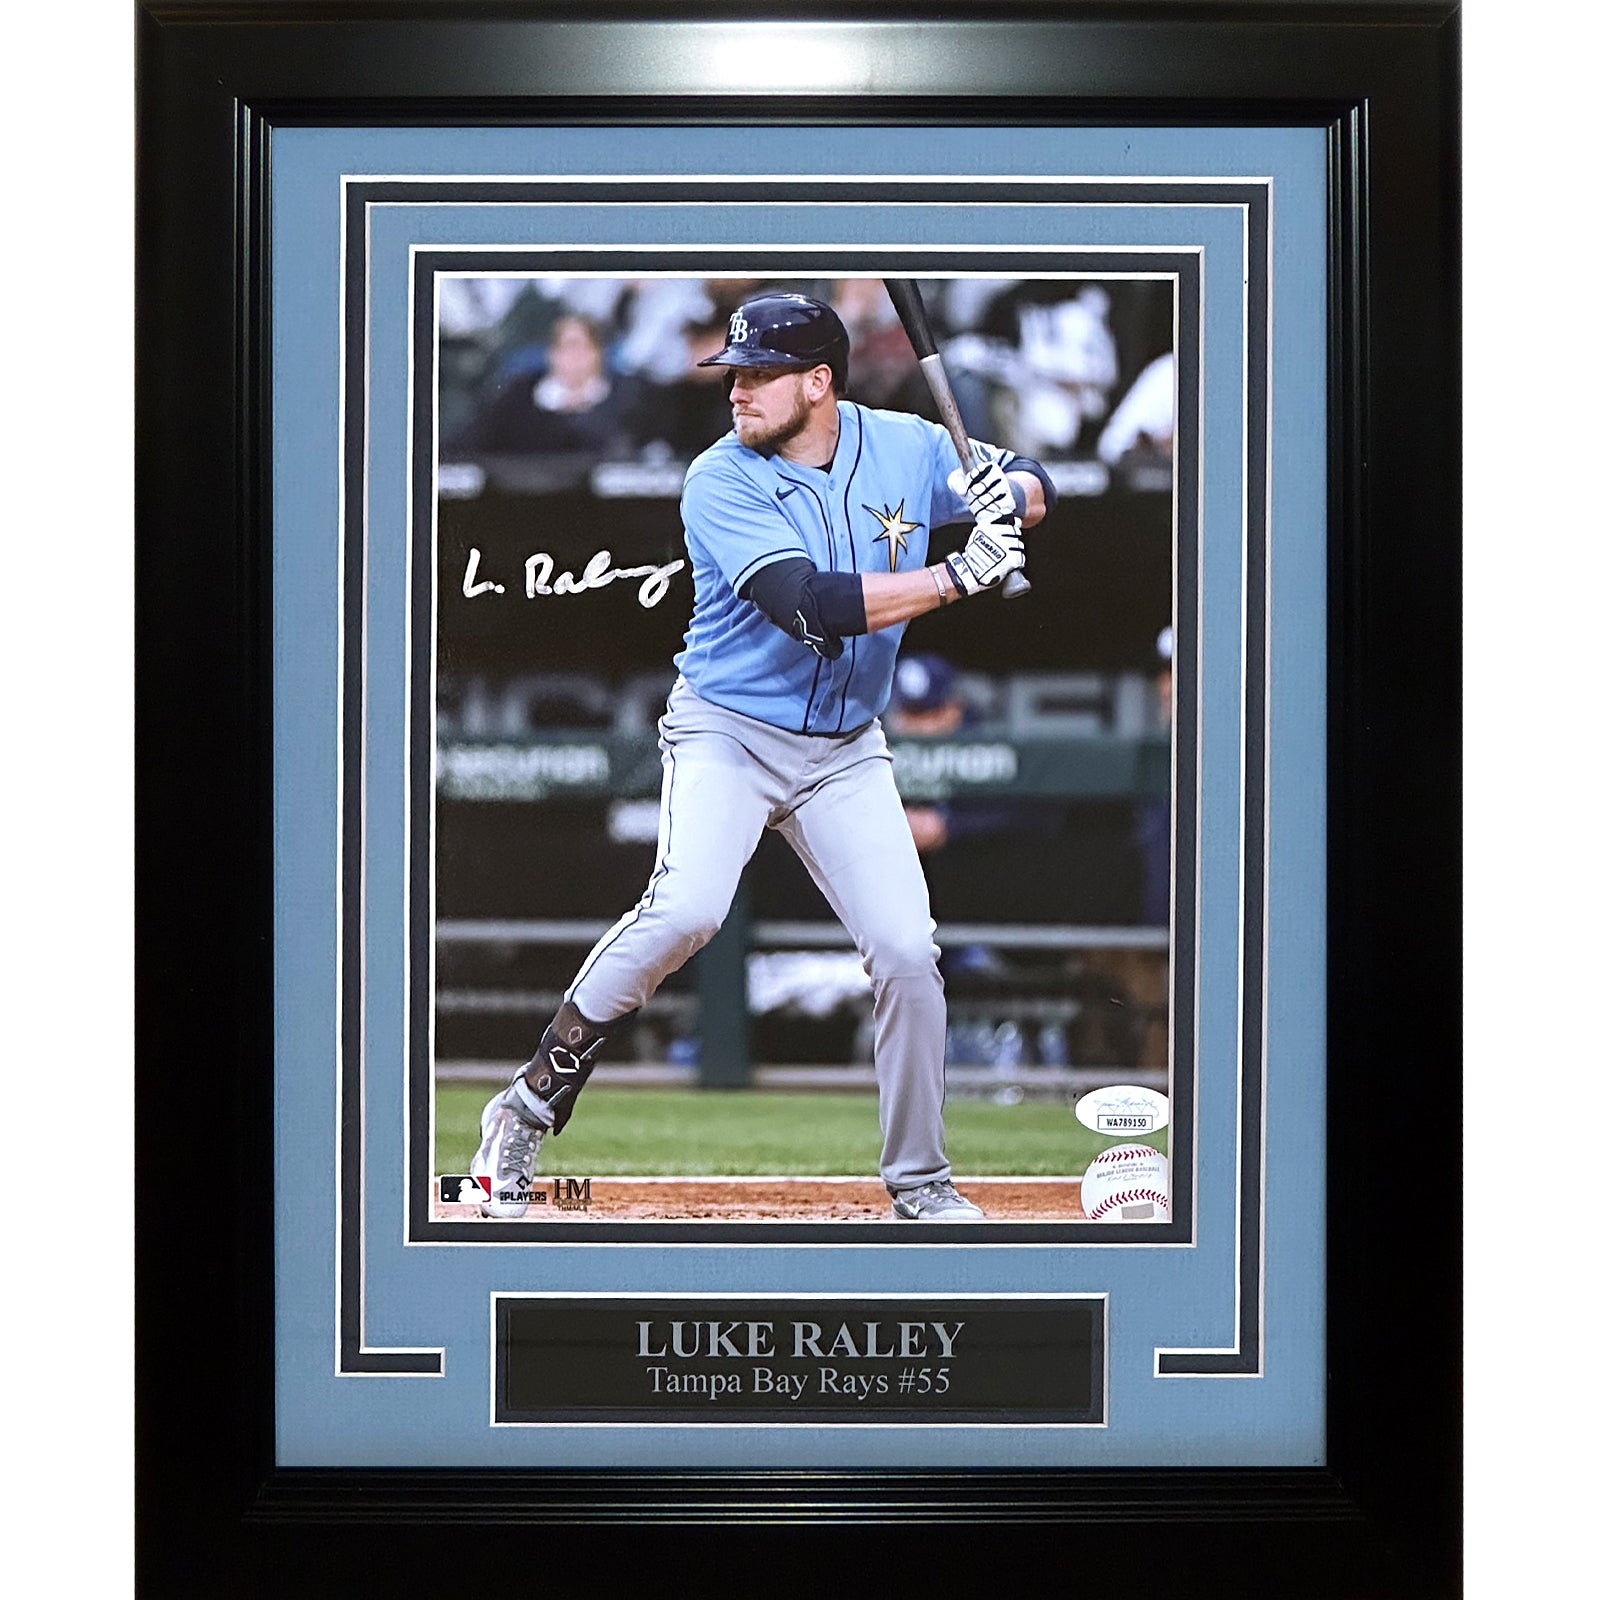 Luke Raley Autographed Tampa Bay Rays (Batting Vertical) Framed 8x10 Photo - JSA